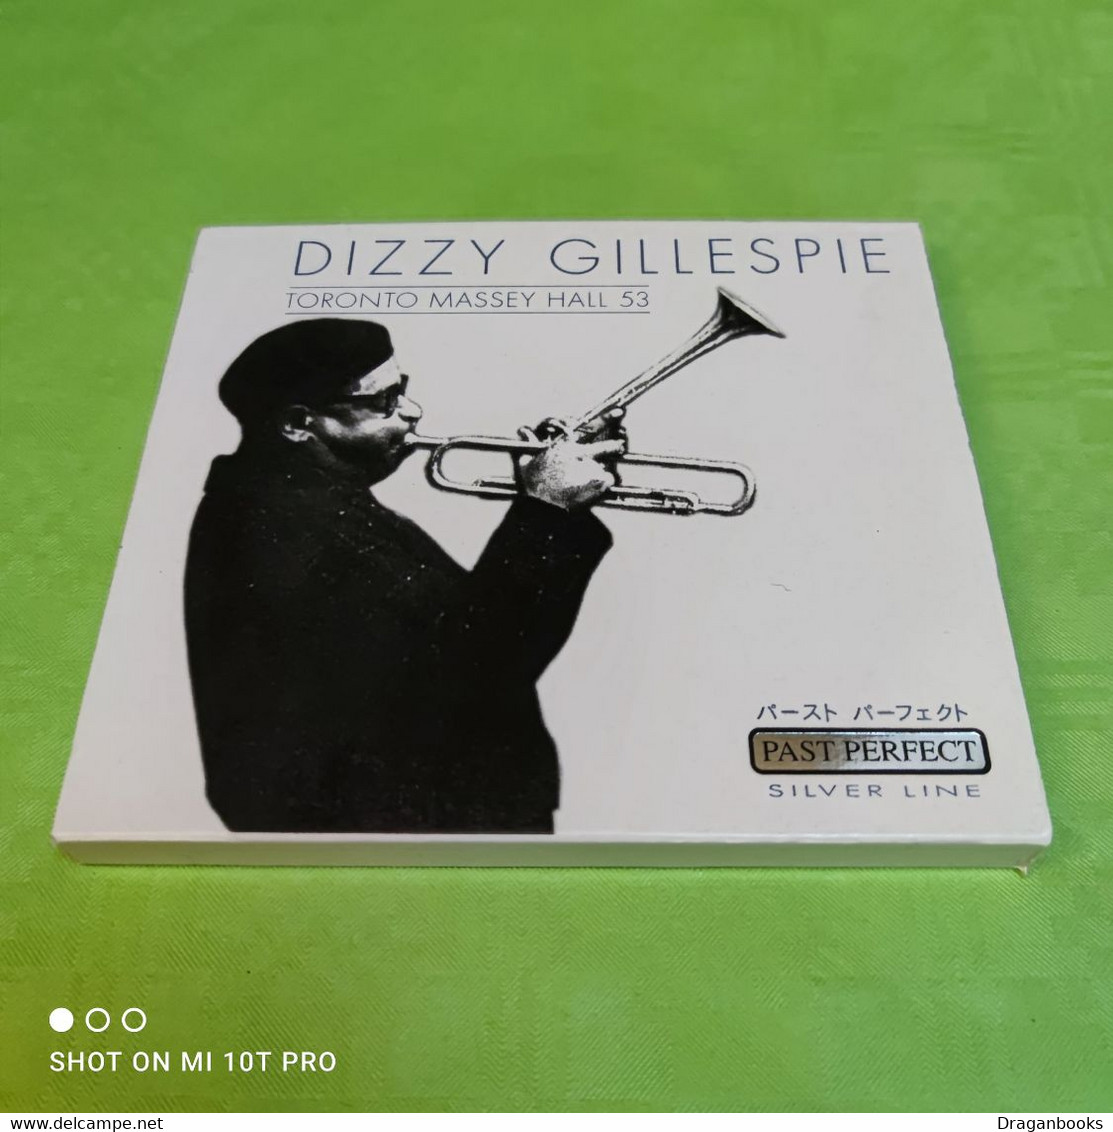 Dizzy Gillespie - Toronto Massey Hall 53 - Strumentali